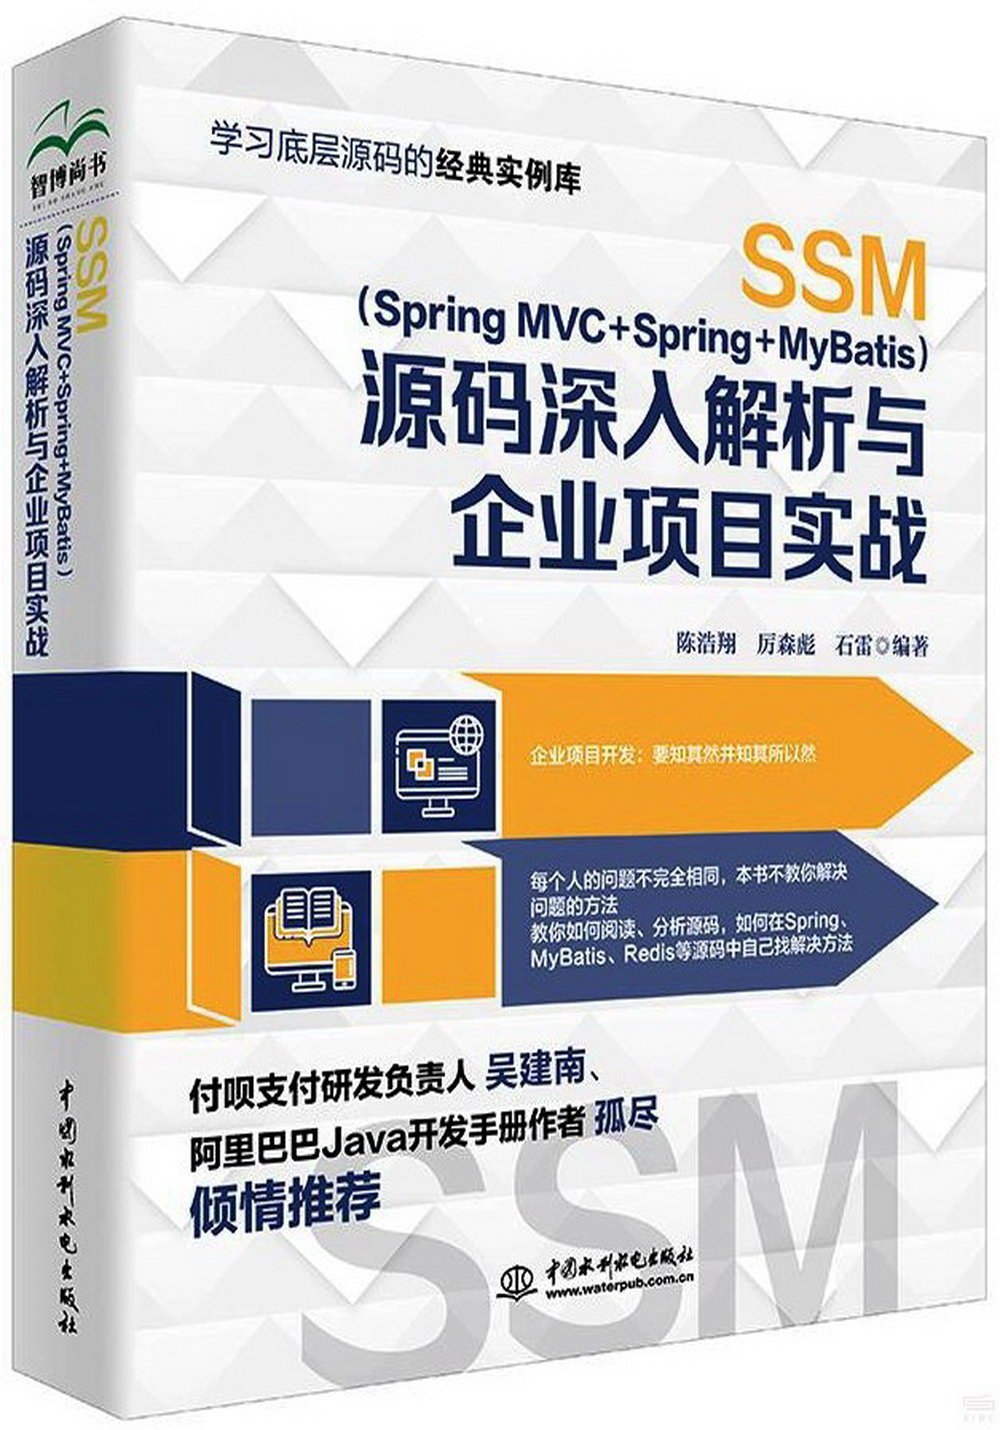 SSM（SpringMVC+Spring+MyBatis）源碼深入解析與企業項目實戰